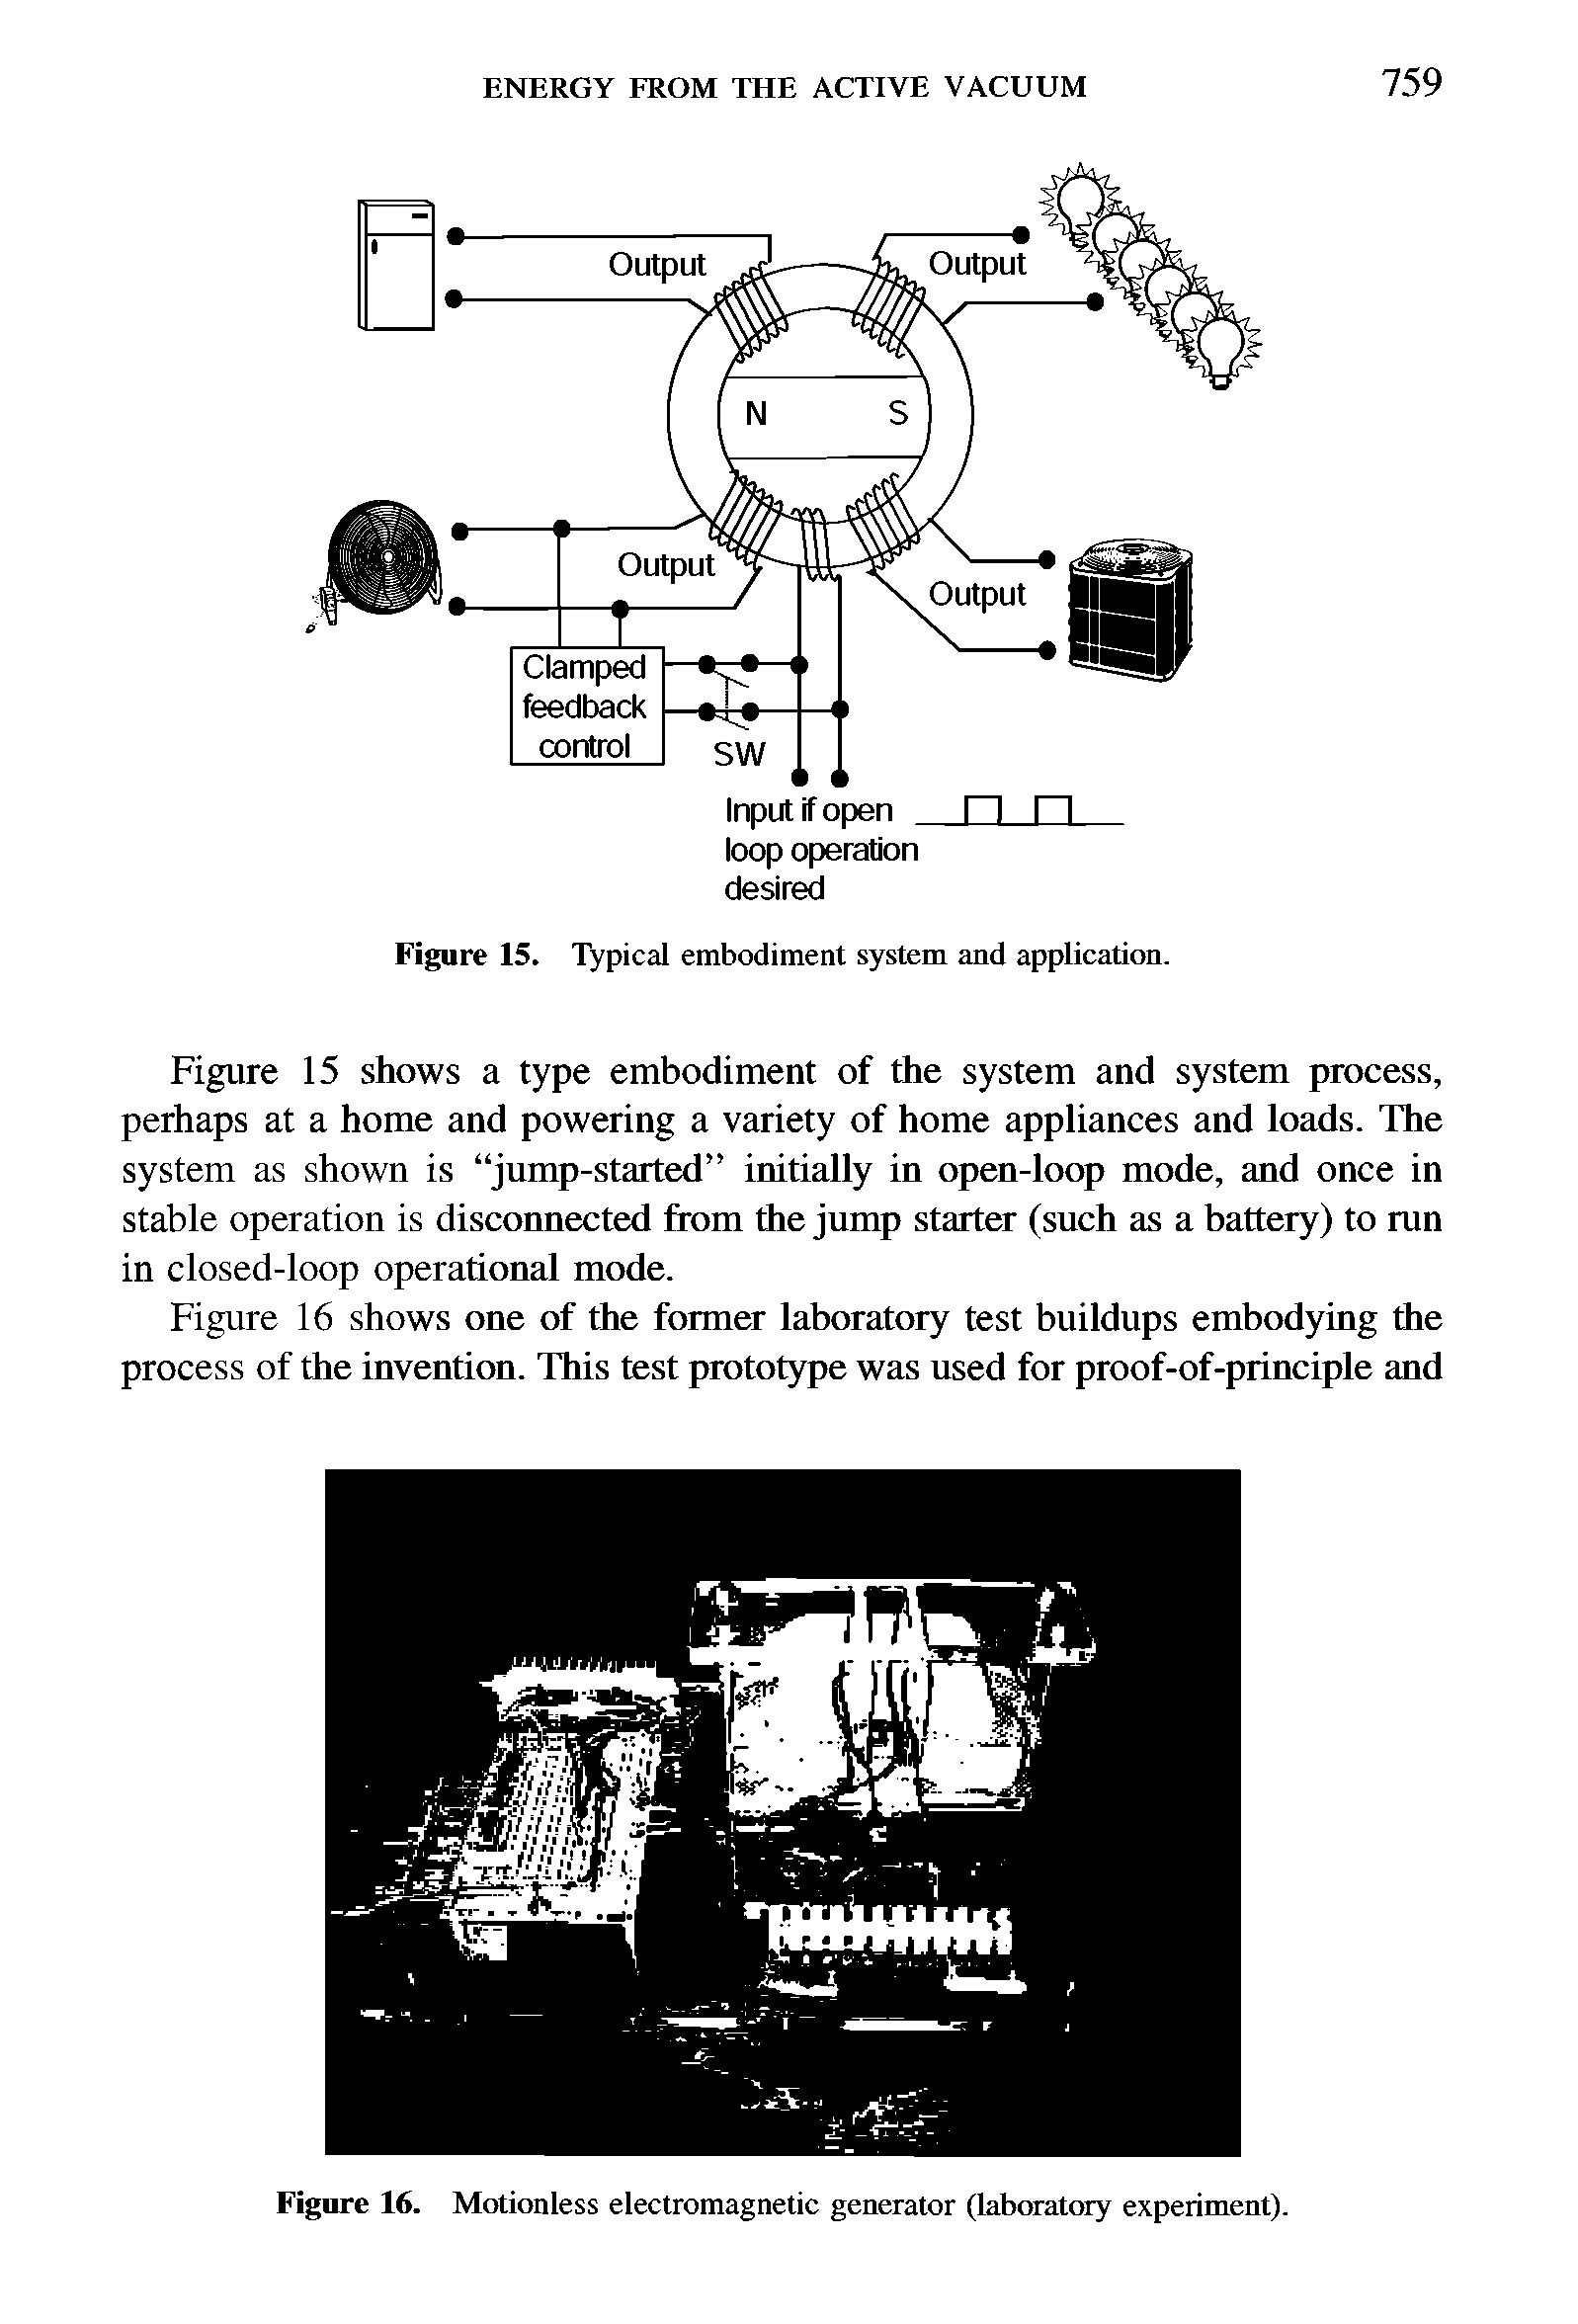 Figure 16. Motionless electromagnetic generator (laboratory experiment).